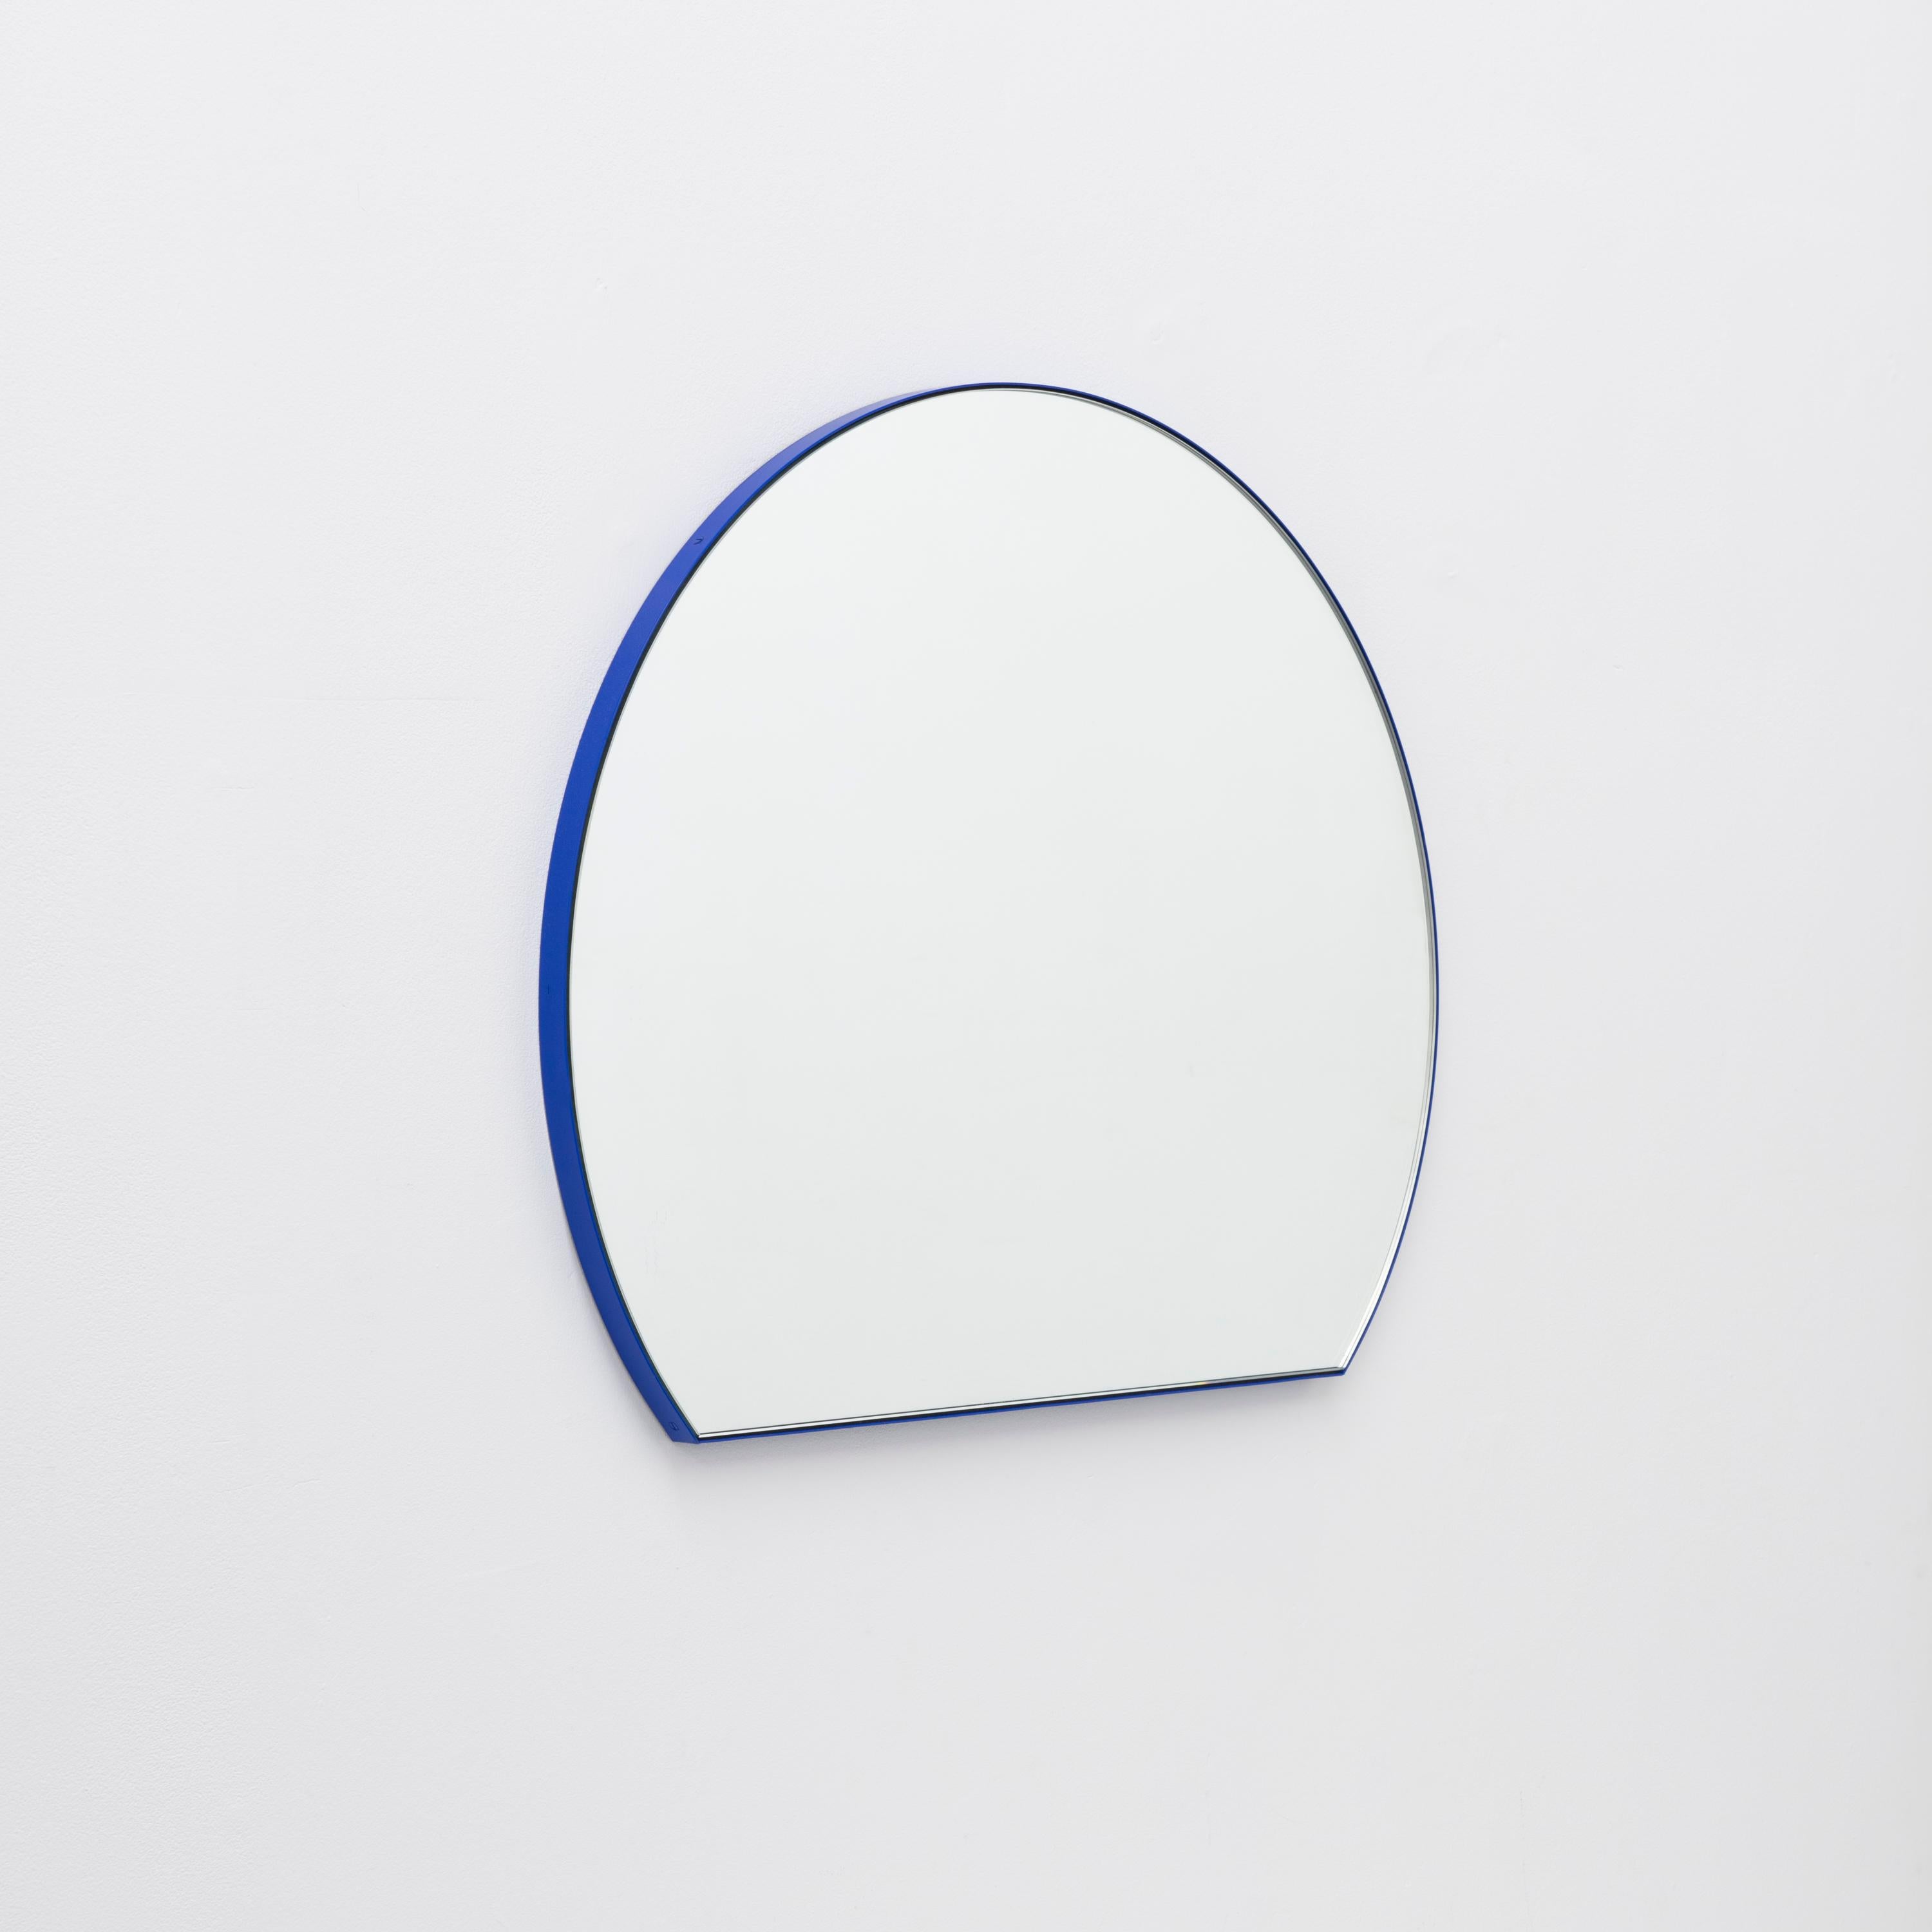 Powder-Coated Orbis Trecus Cropped Circular Modern Mirror with Blue Frame, XL